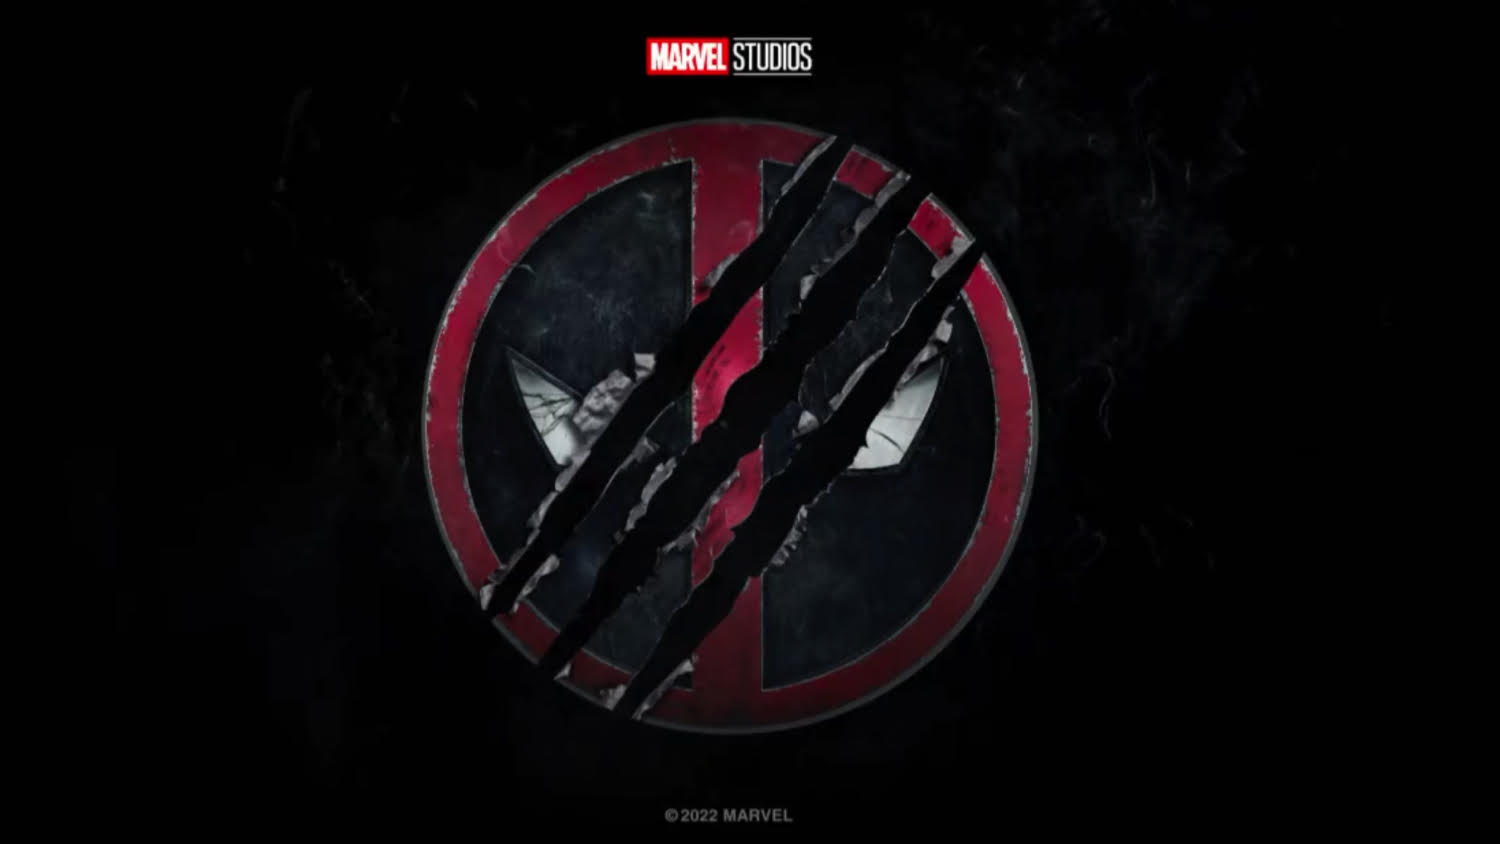 Hugh Jackman will return as Wolverine in Marvel Studios' 'Deadpool 3'.